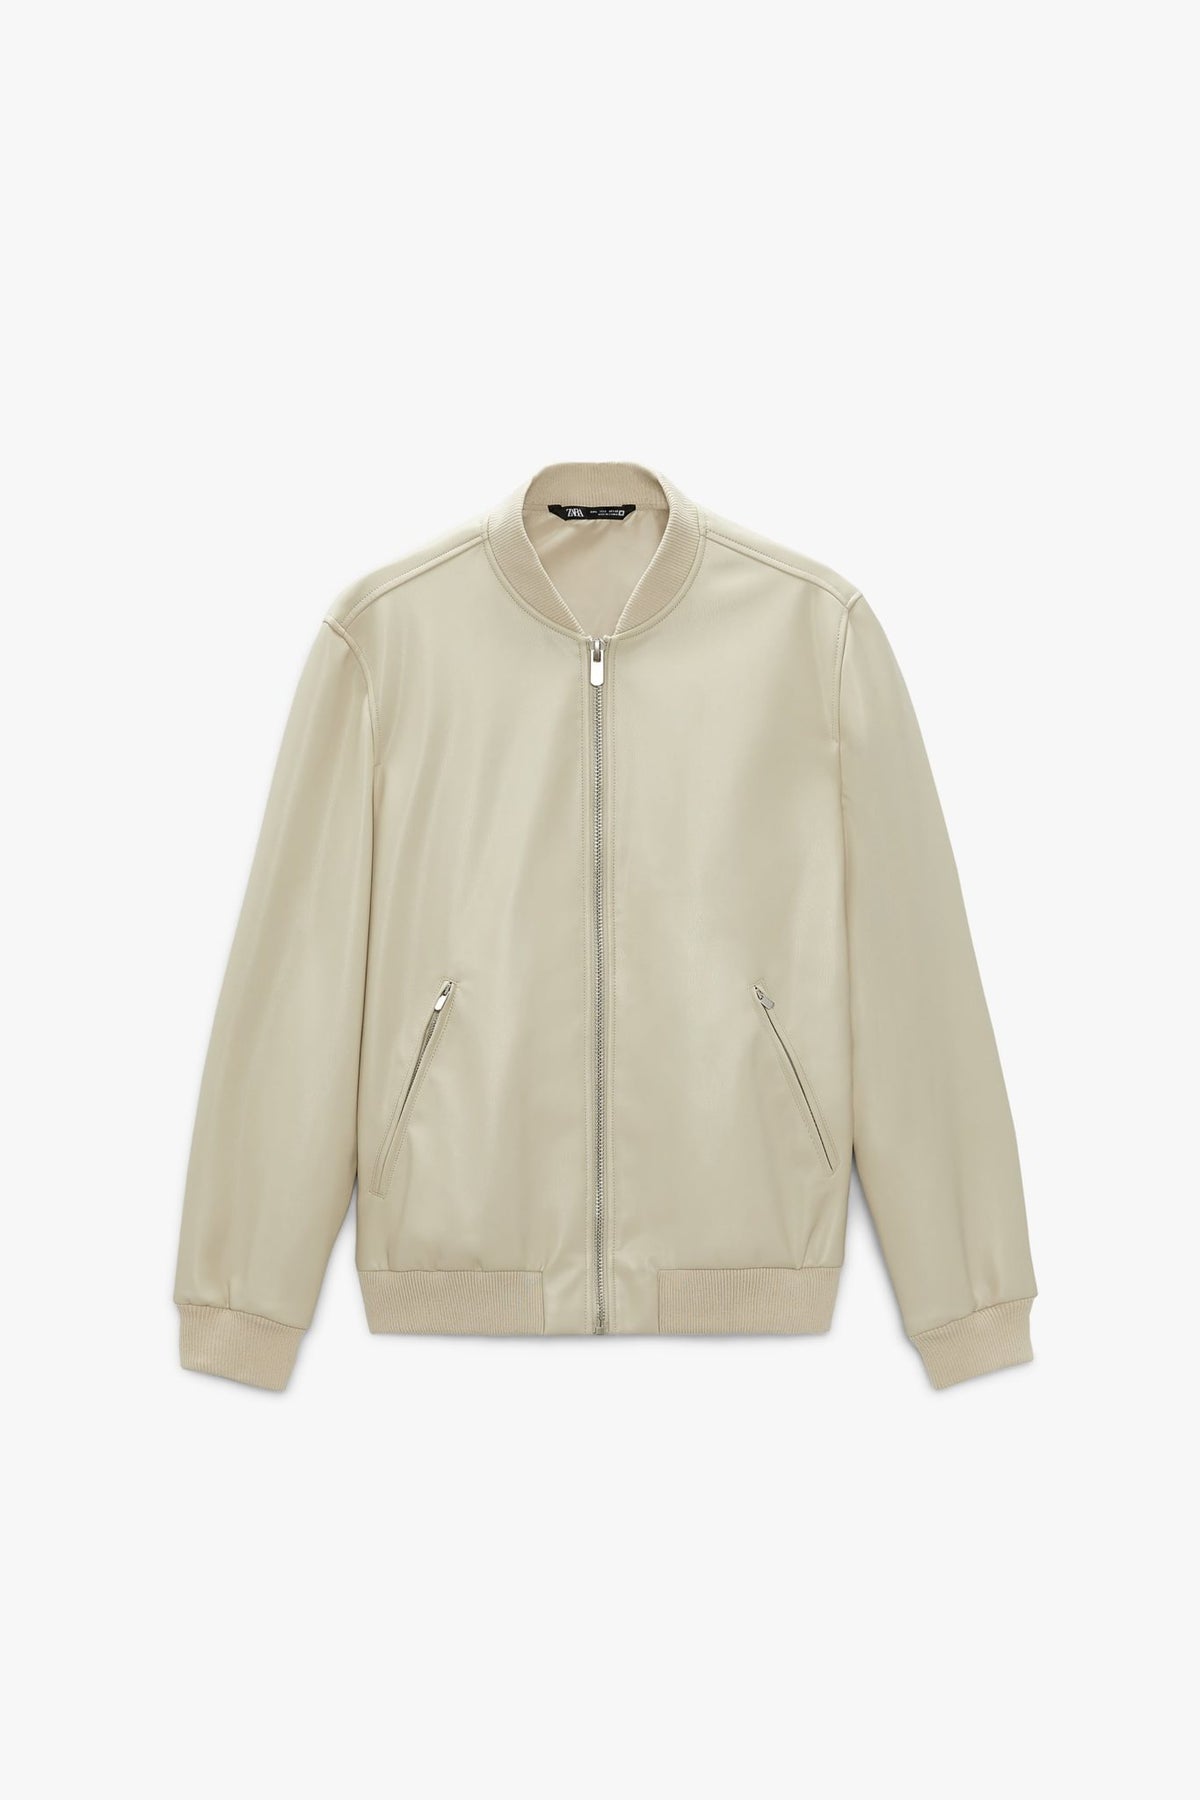 ZR faux leather white bomber jacket (00268)